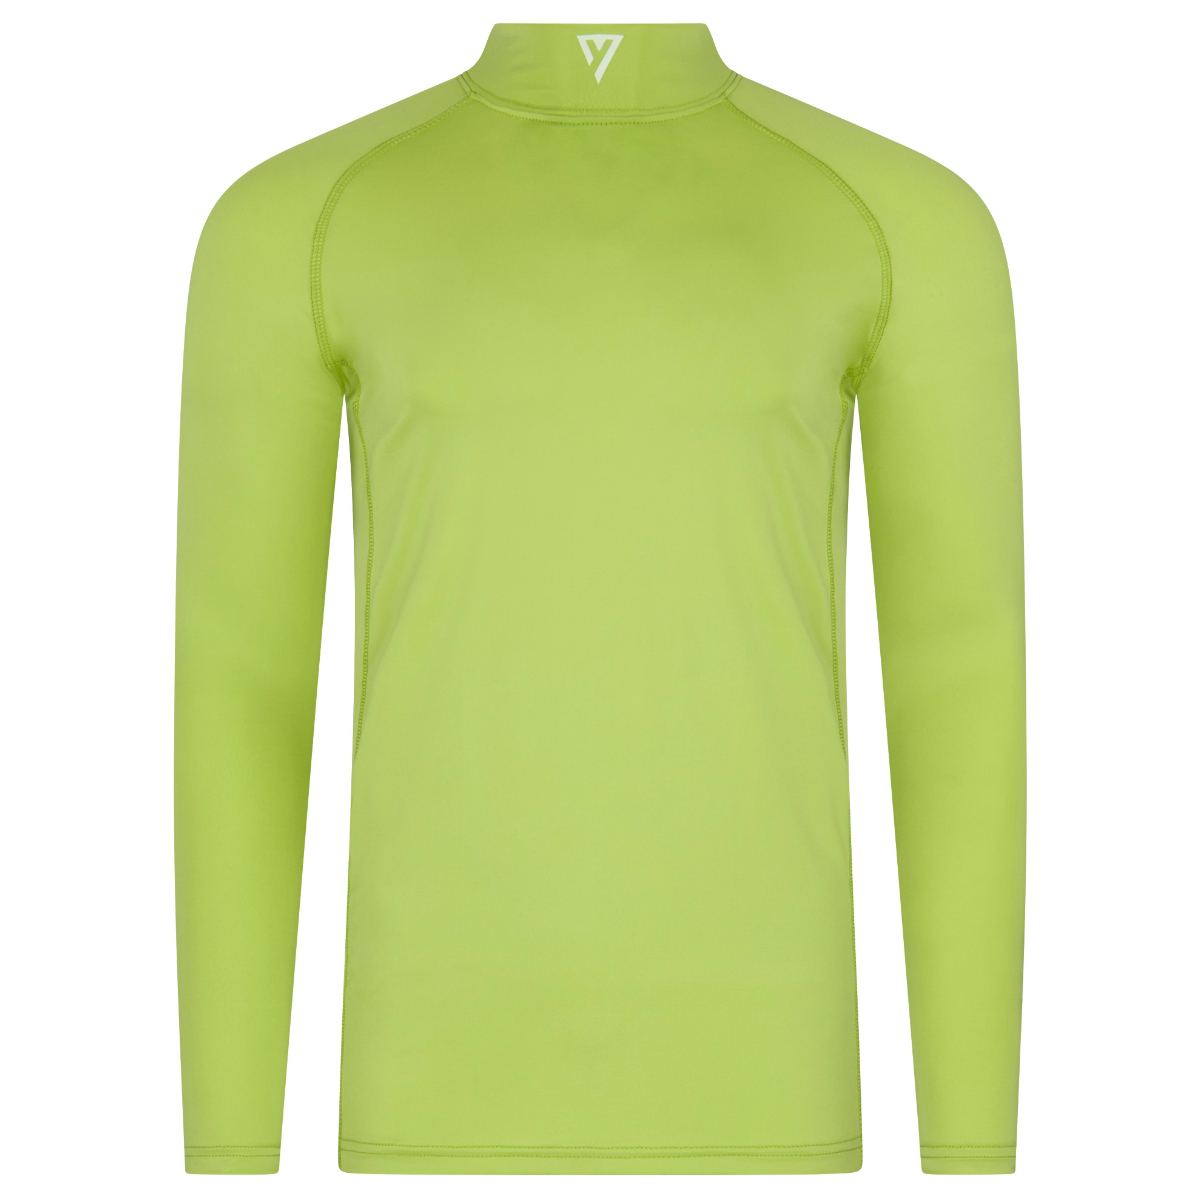 BYRG Ultimate Compression Golf Shirt green